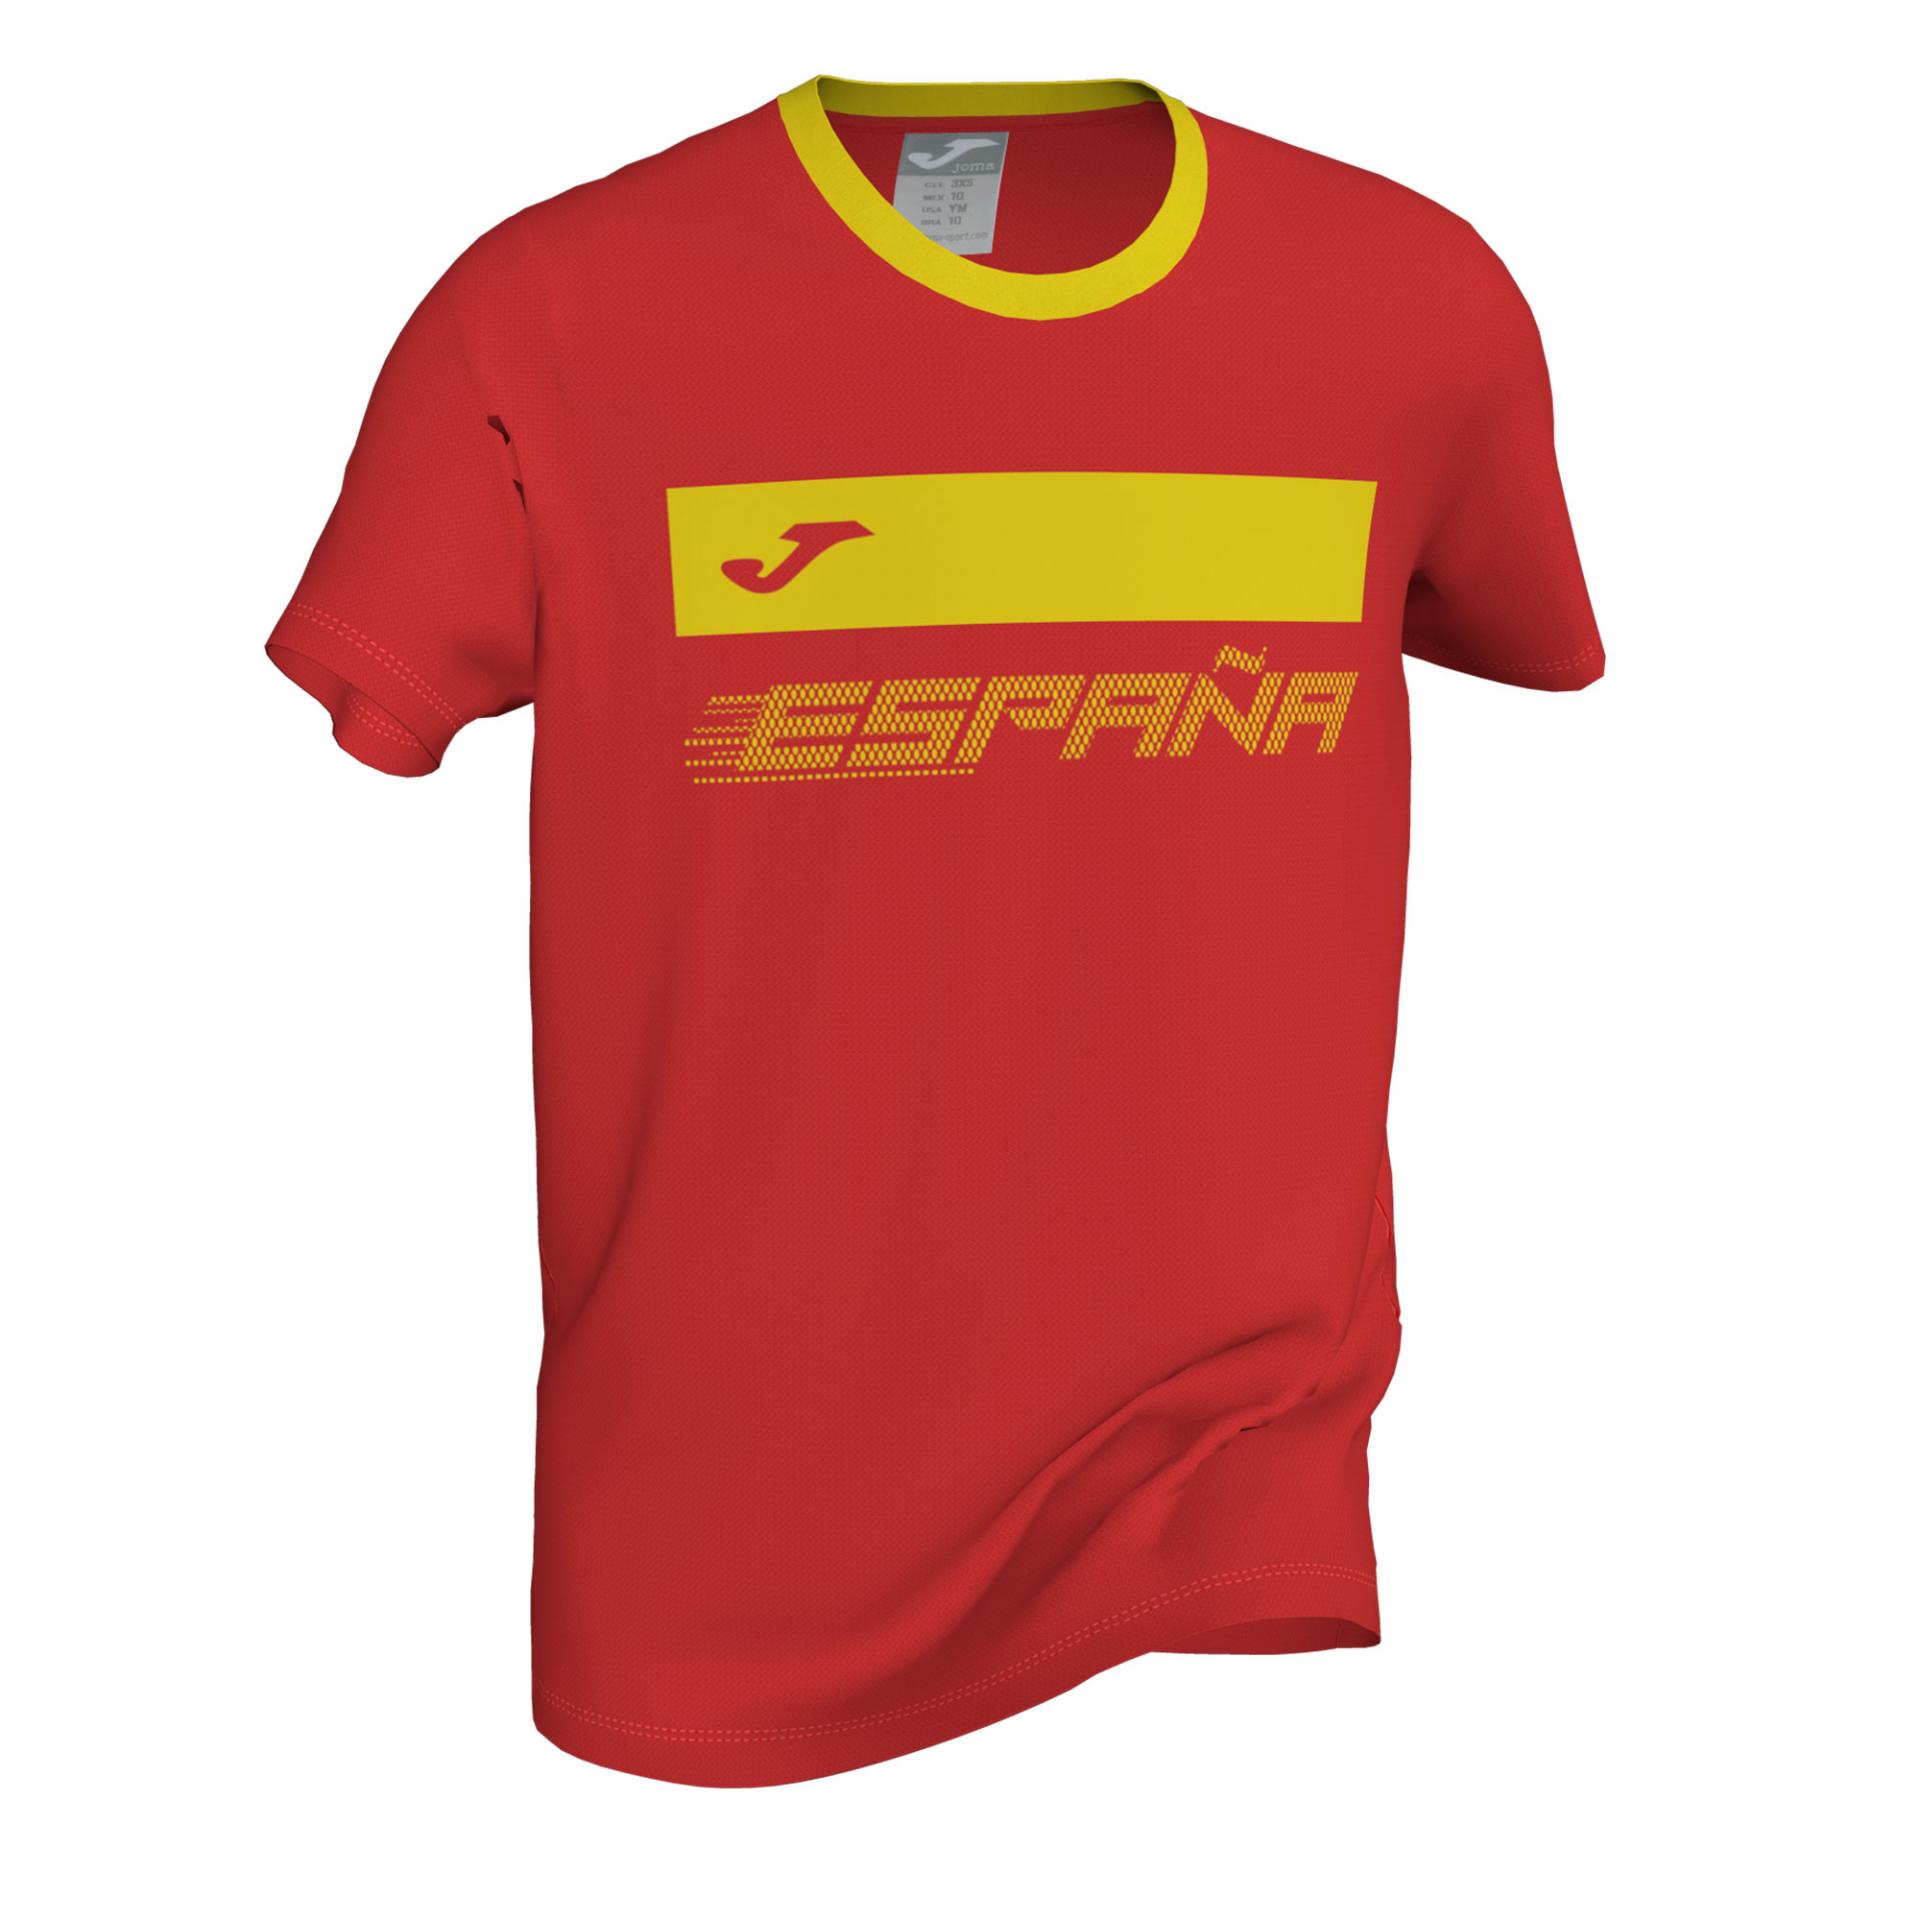 Camiseta España - niño